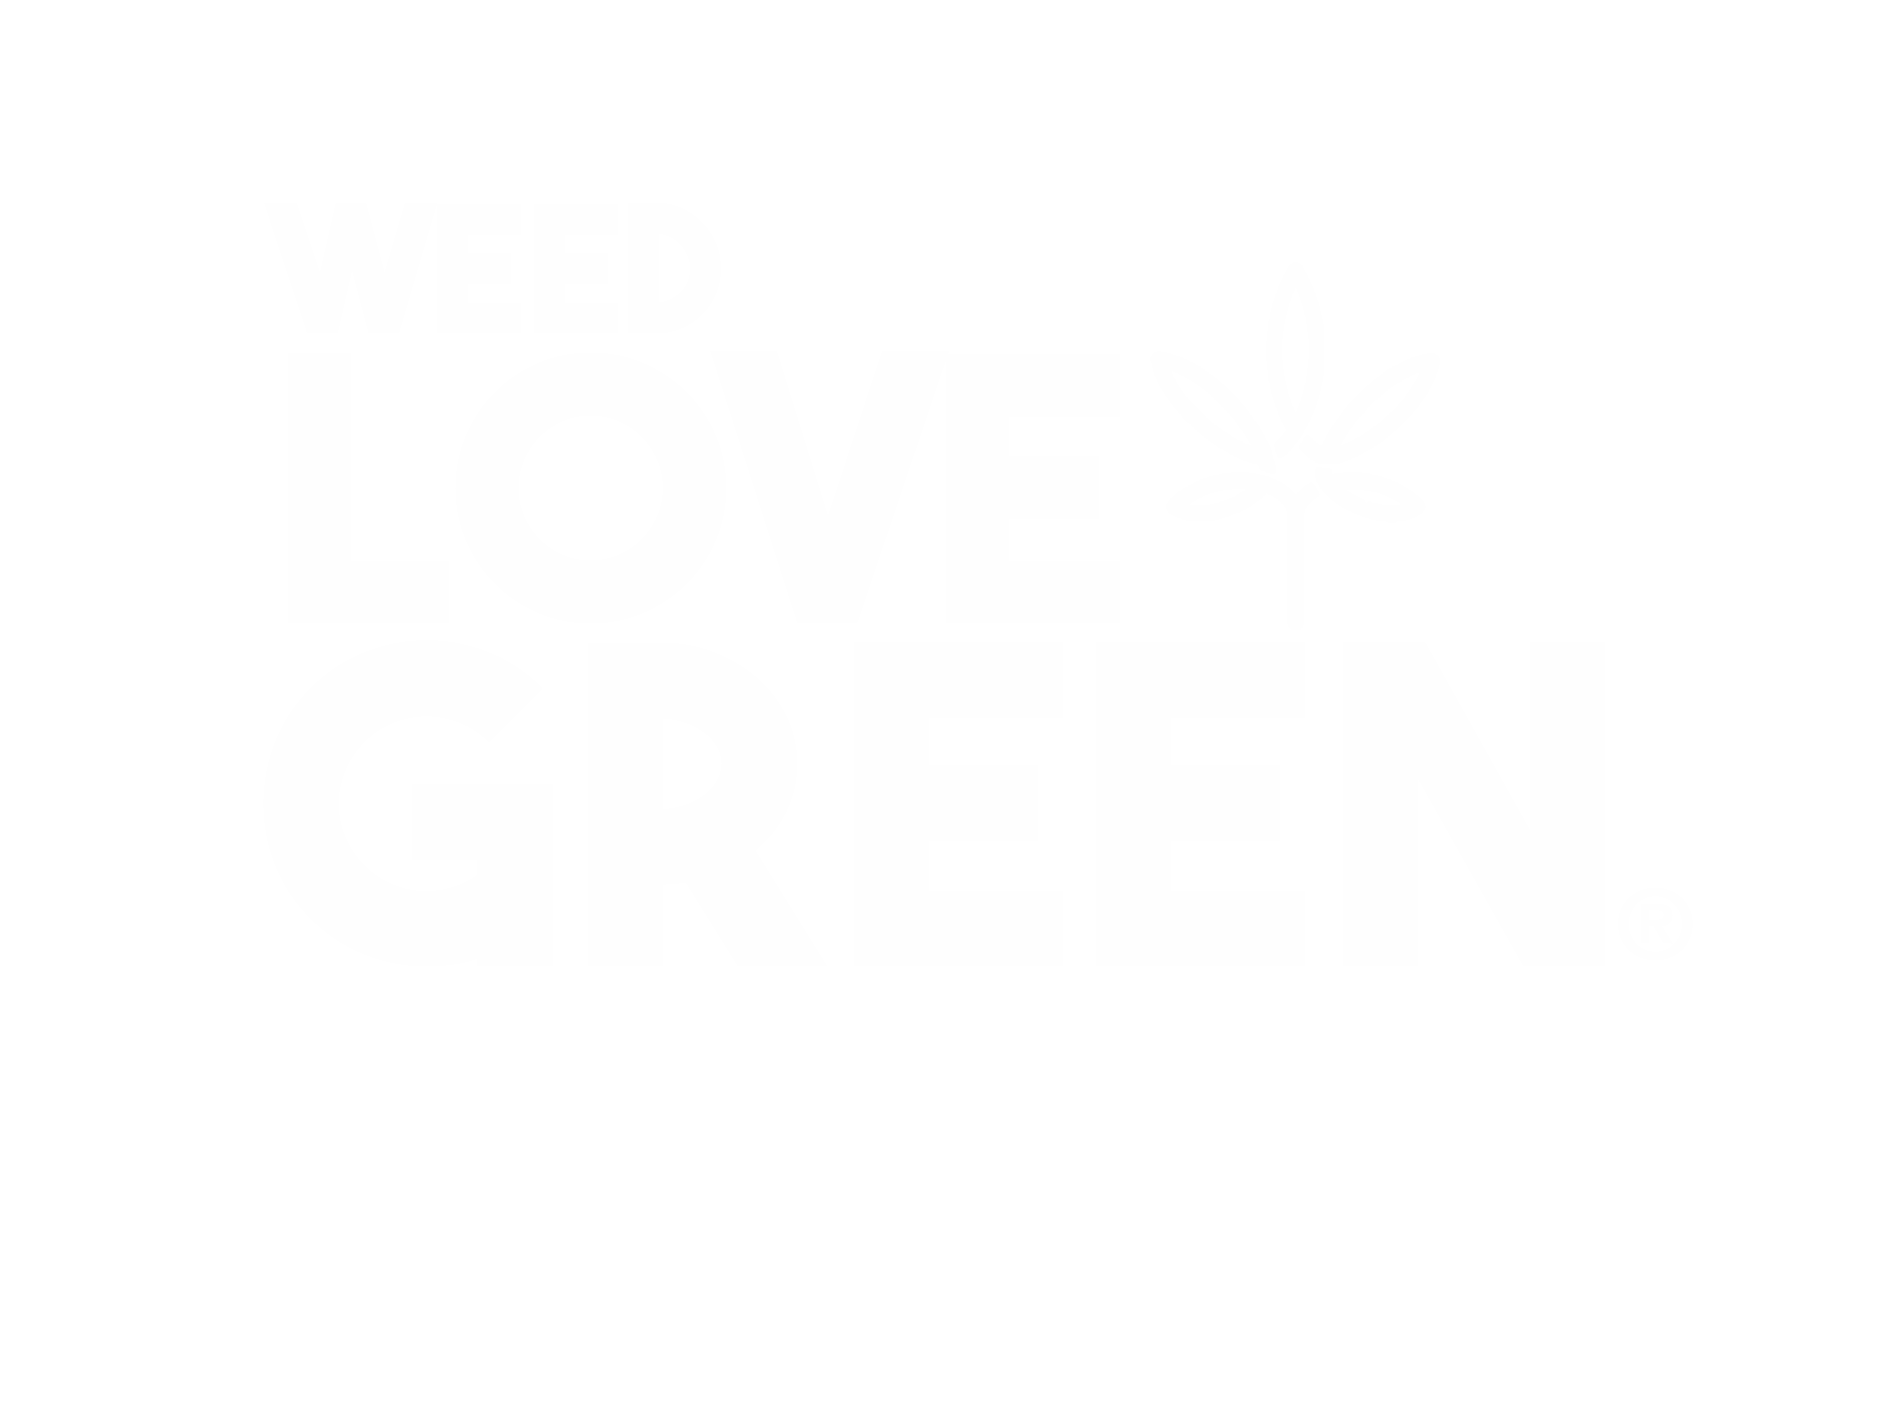 WEED LOVE GREEN